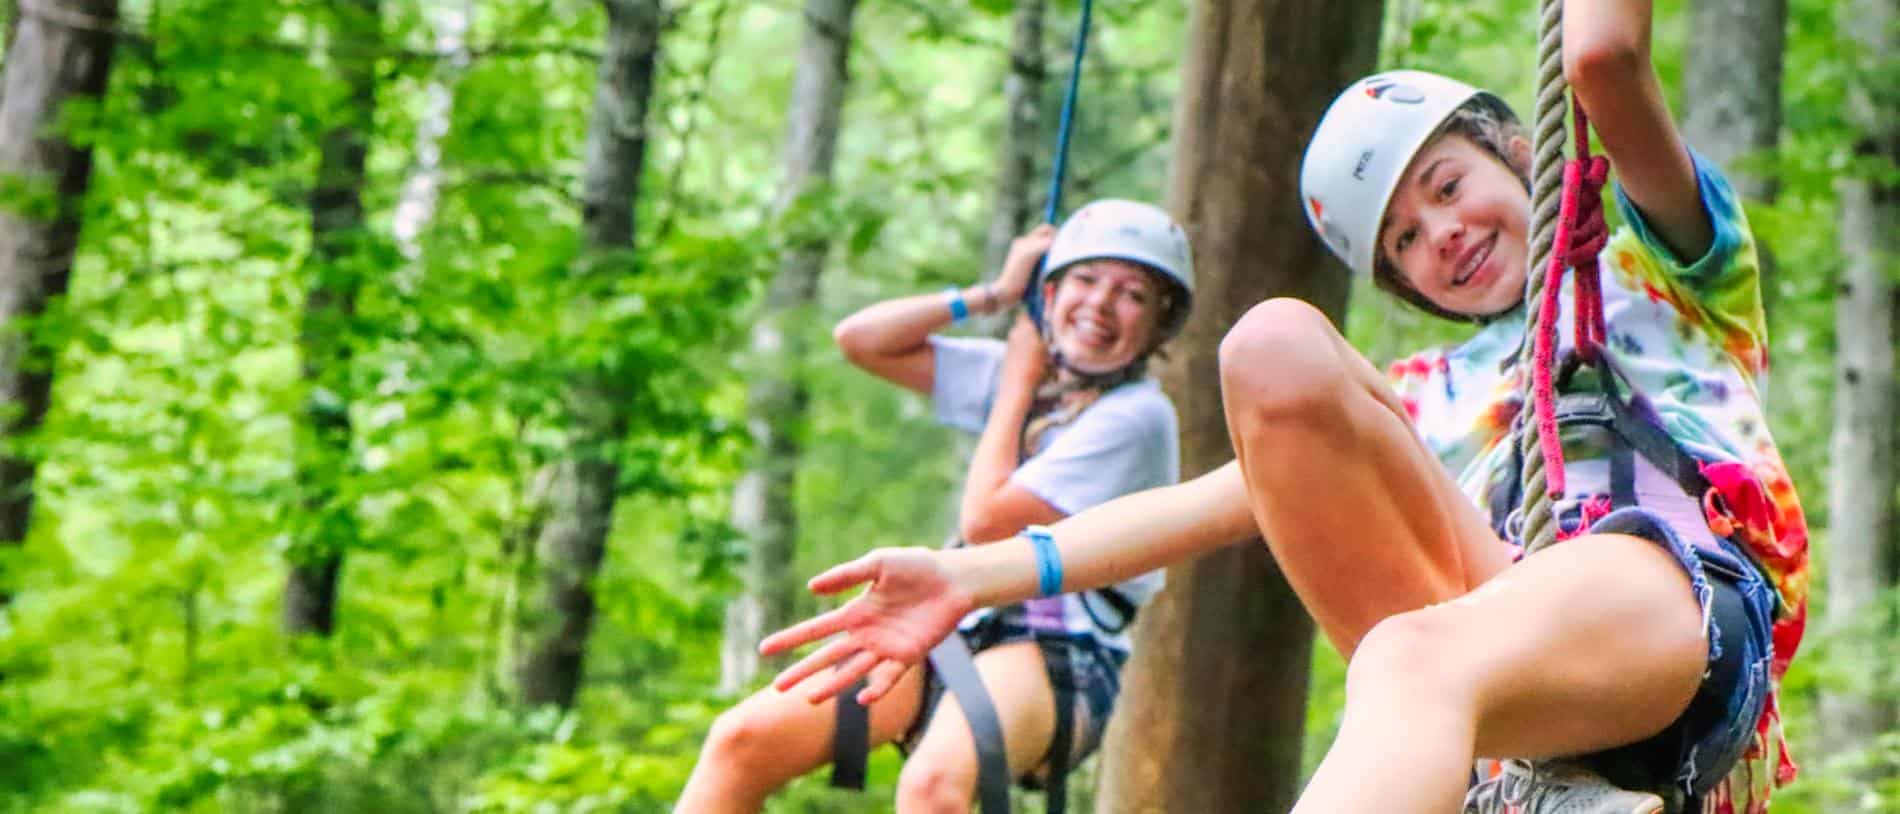 North Carolina camp girls climbing on ropes